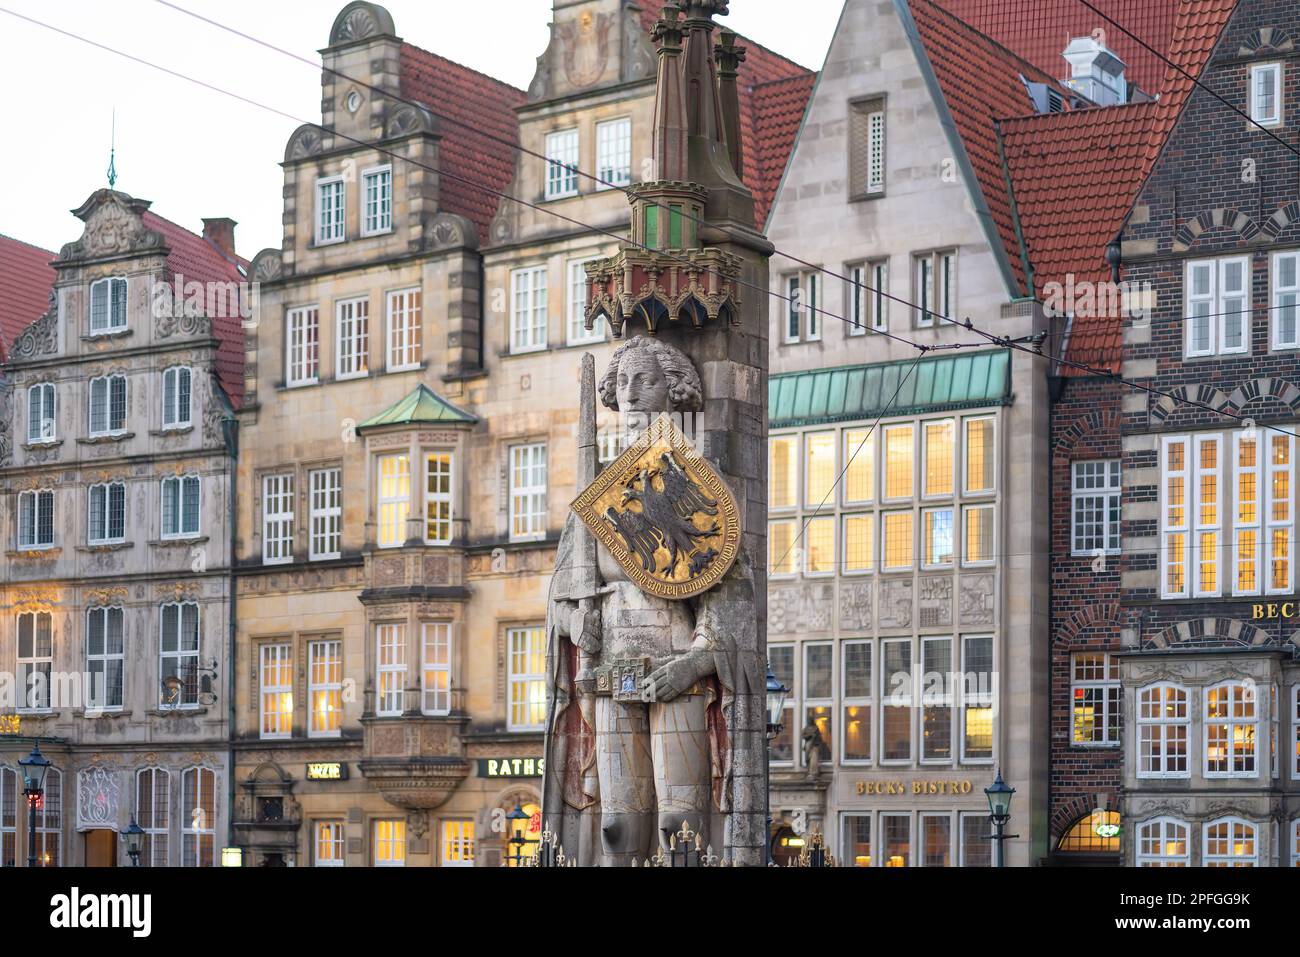 Bremen Roland Statue at Market Square - Bremen, Germany Stock Photo